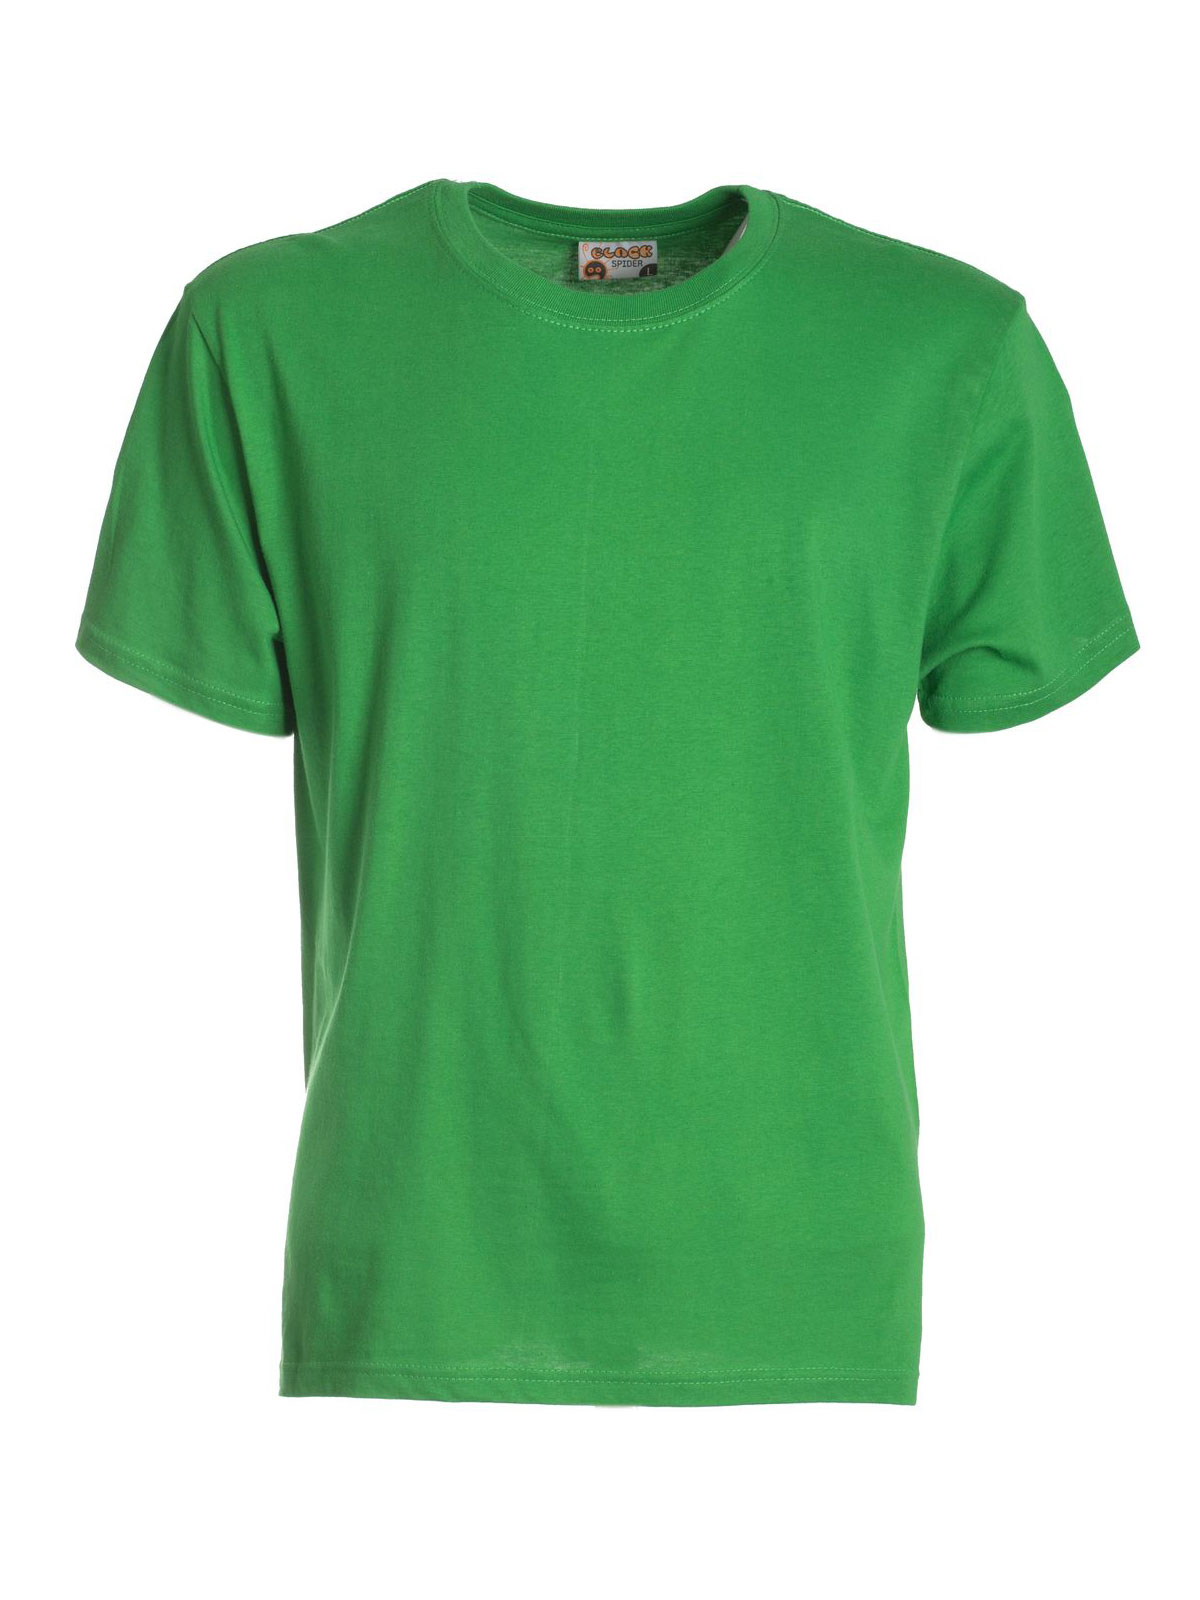 kids-classic-t-shirt-kelly-green.webp